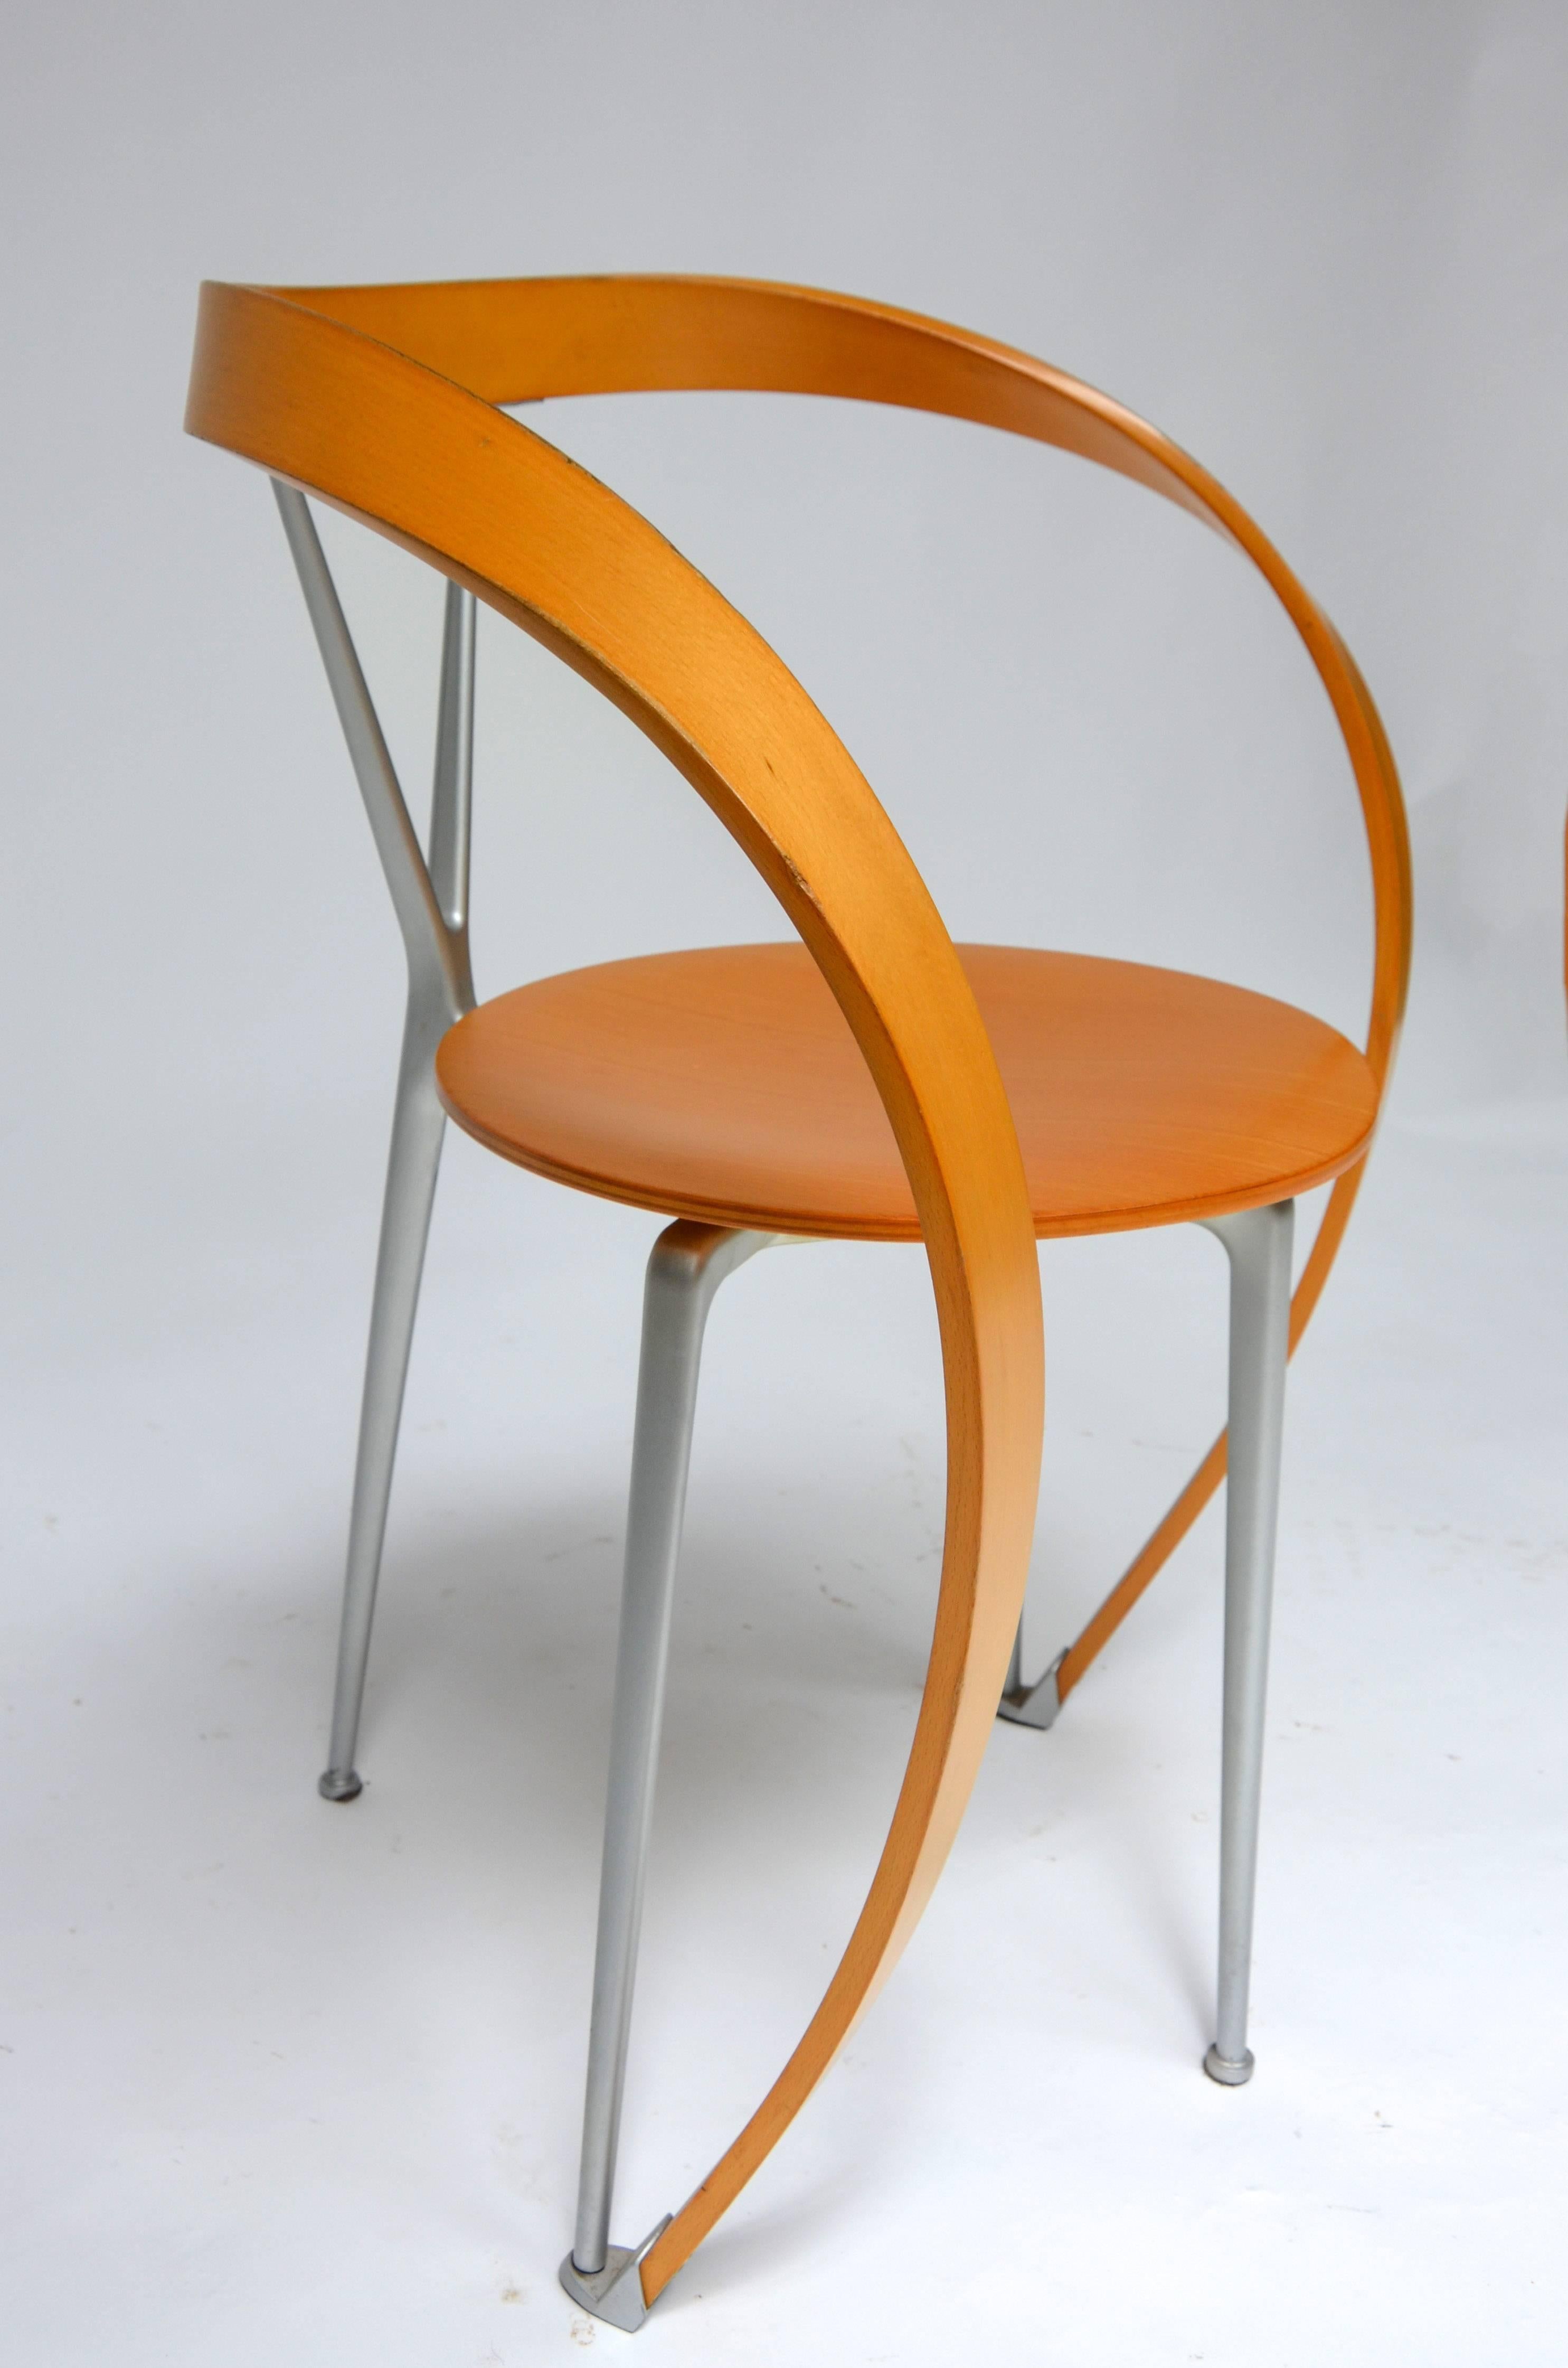 Aluminum Set of Four Revers Chairs, Andrea Branzi for Cassina, 1993